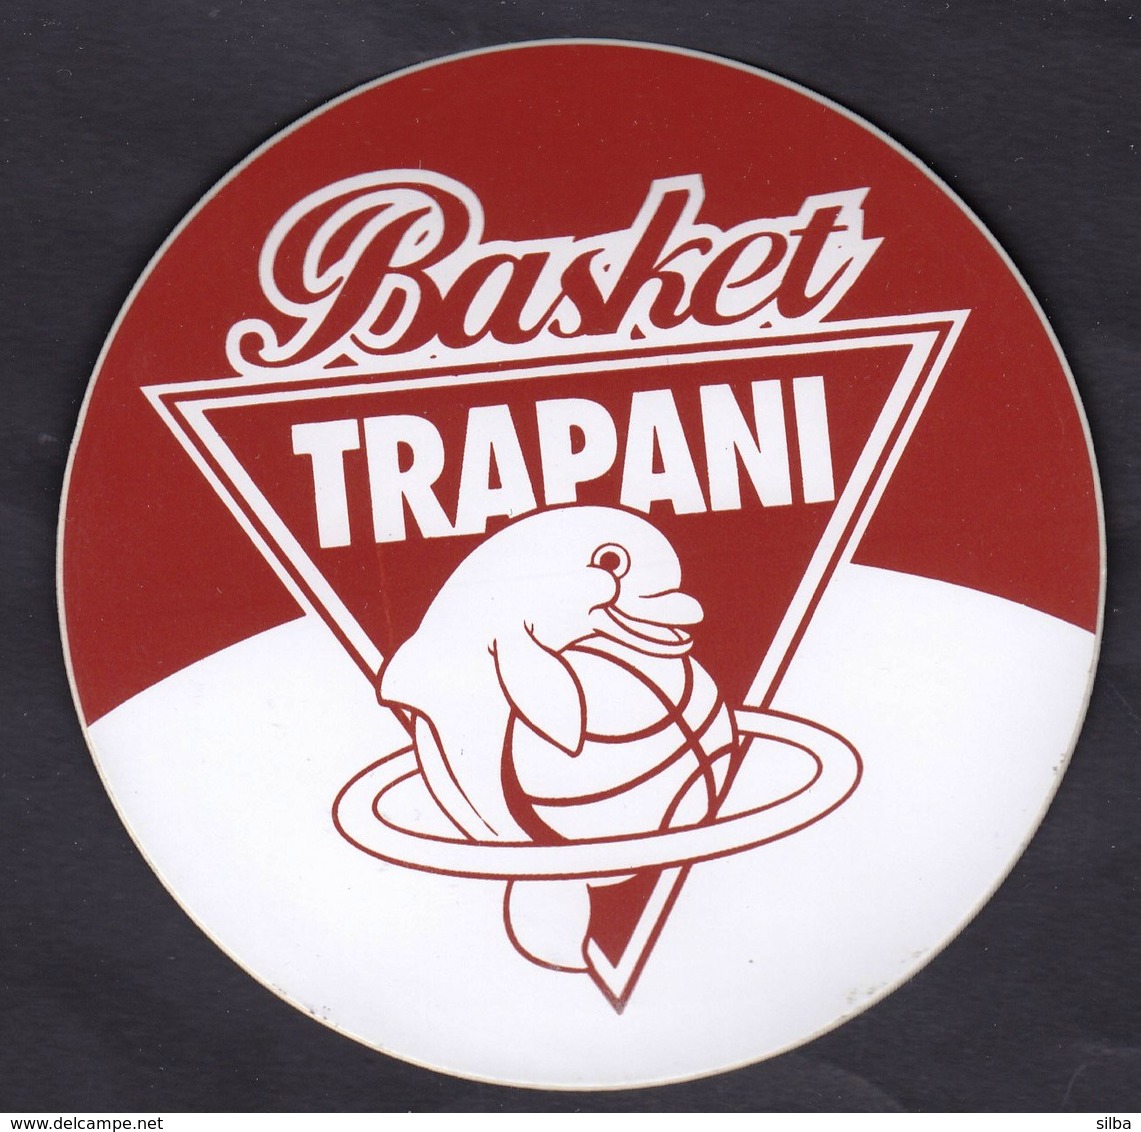 Basketball / Basket Trapani / Dolphin / Adesivo Sticker Label Autocollant / Pallacanestro - Bekleidung, Souvenirs Und Sonstige